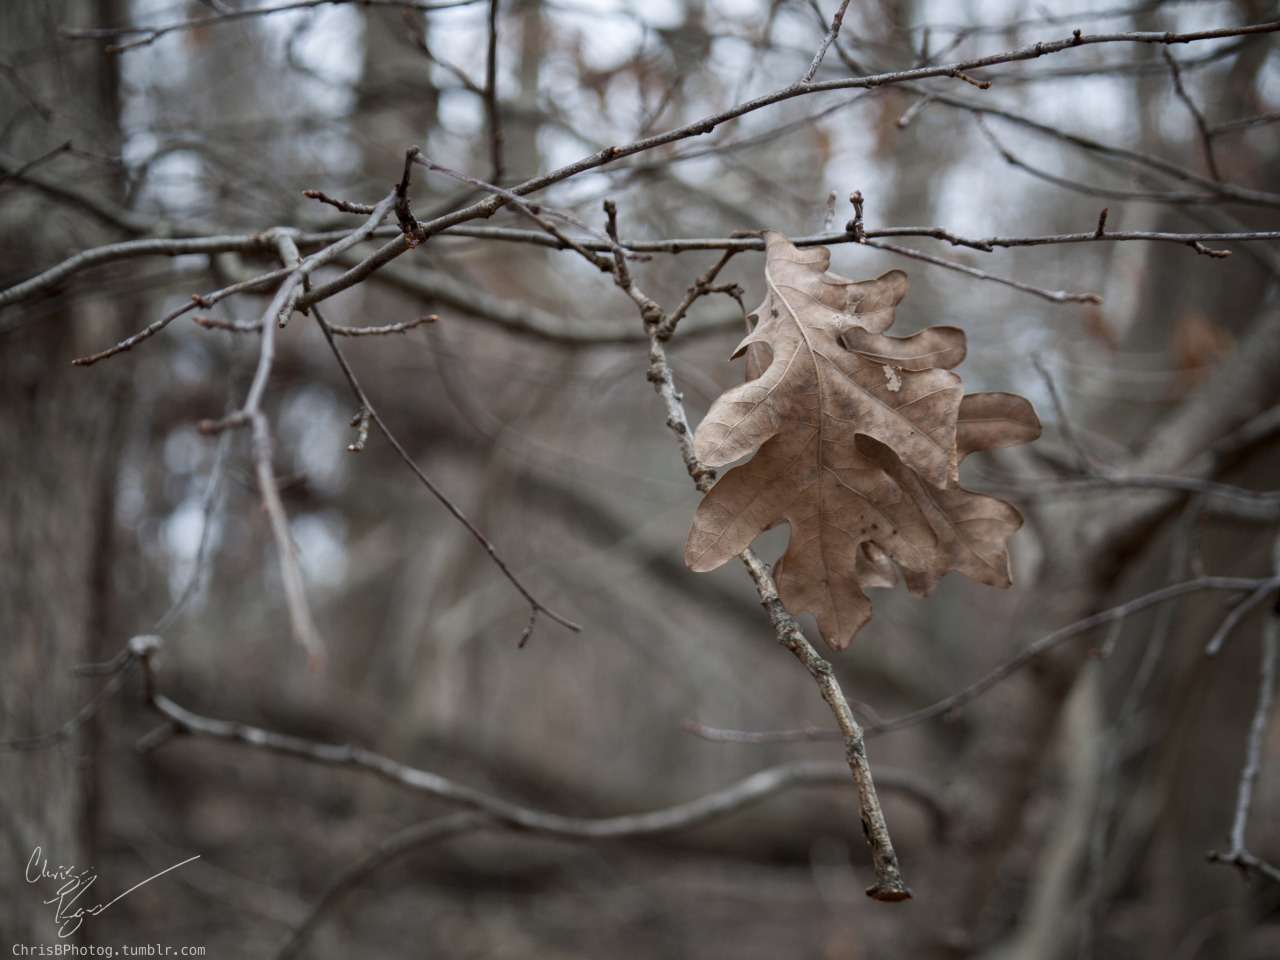 A few oak leaves